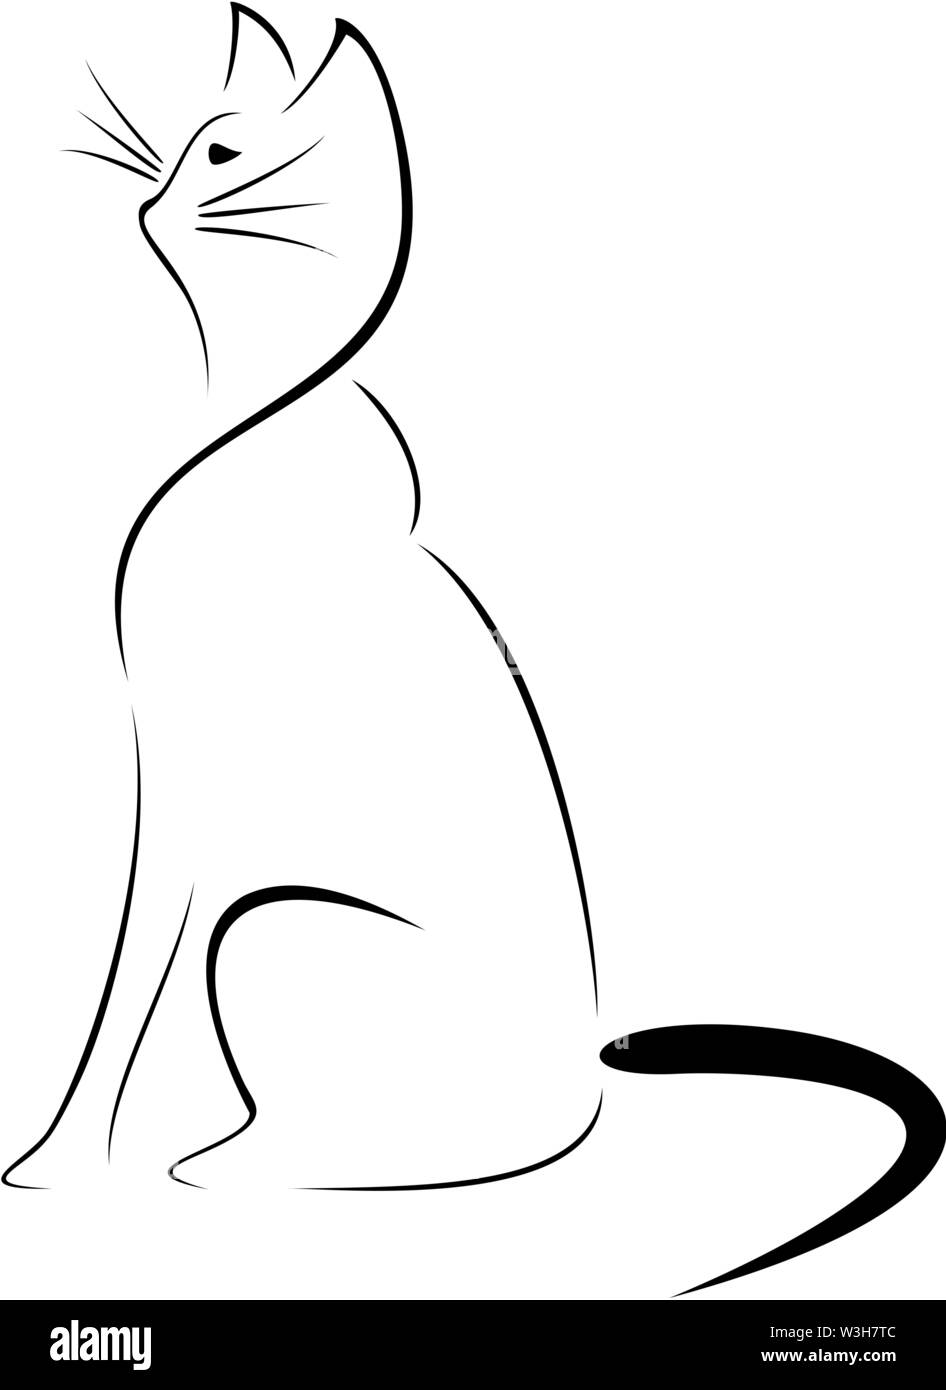 Linear figure cat genre minimalism Stock Vector